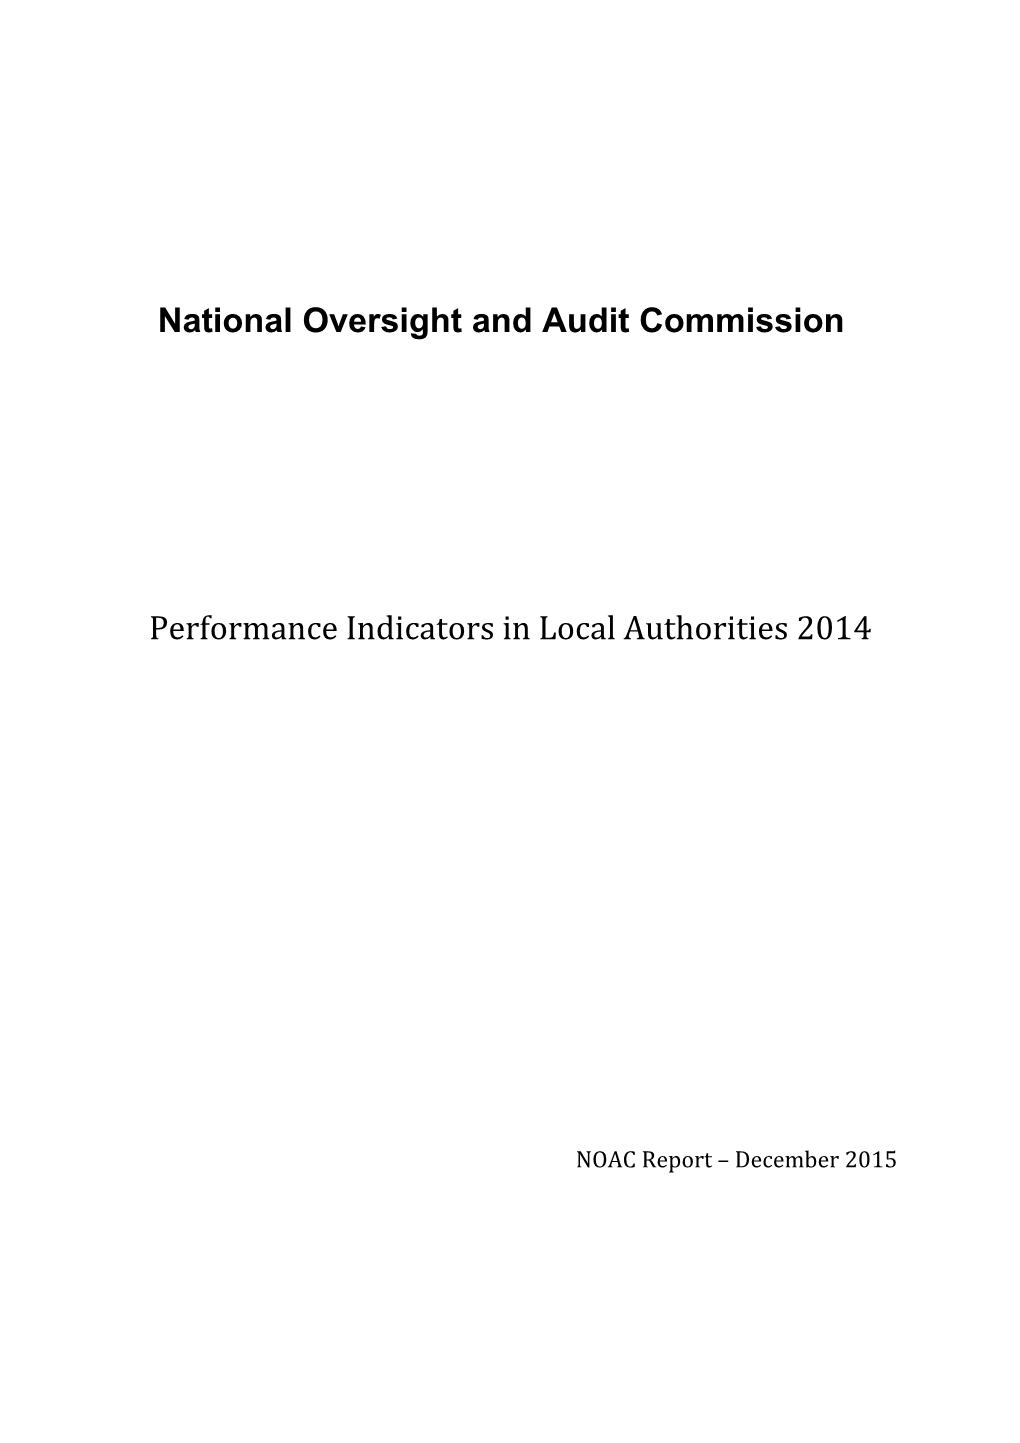 Performance Indicators In Local Authorities